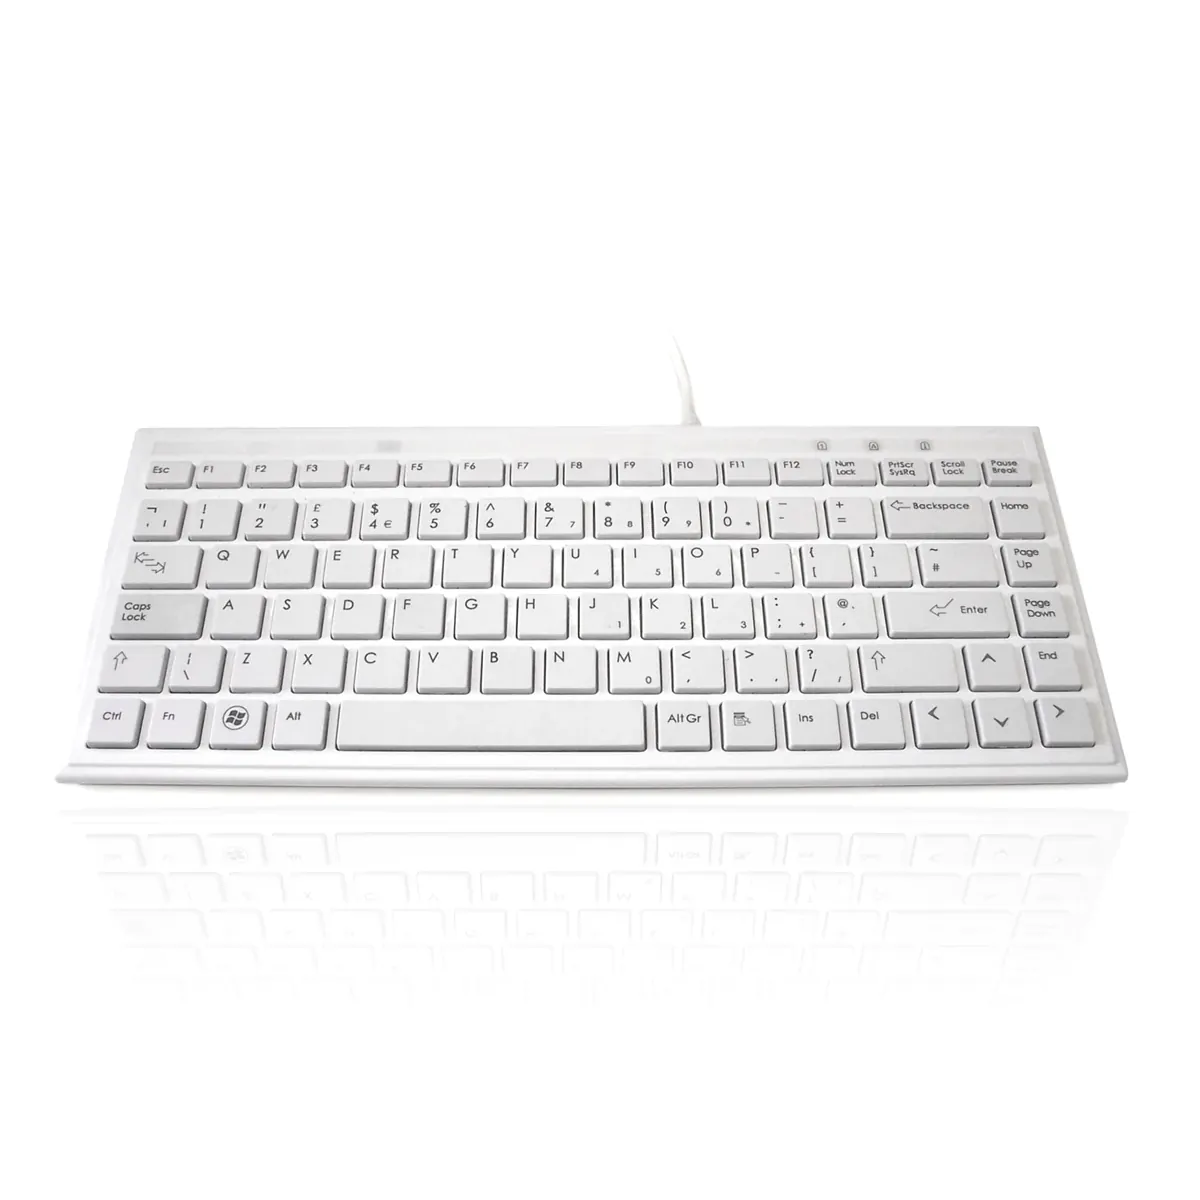 Ceratech 395 Keyboard White